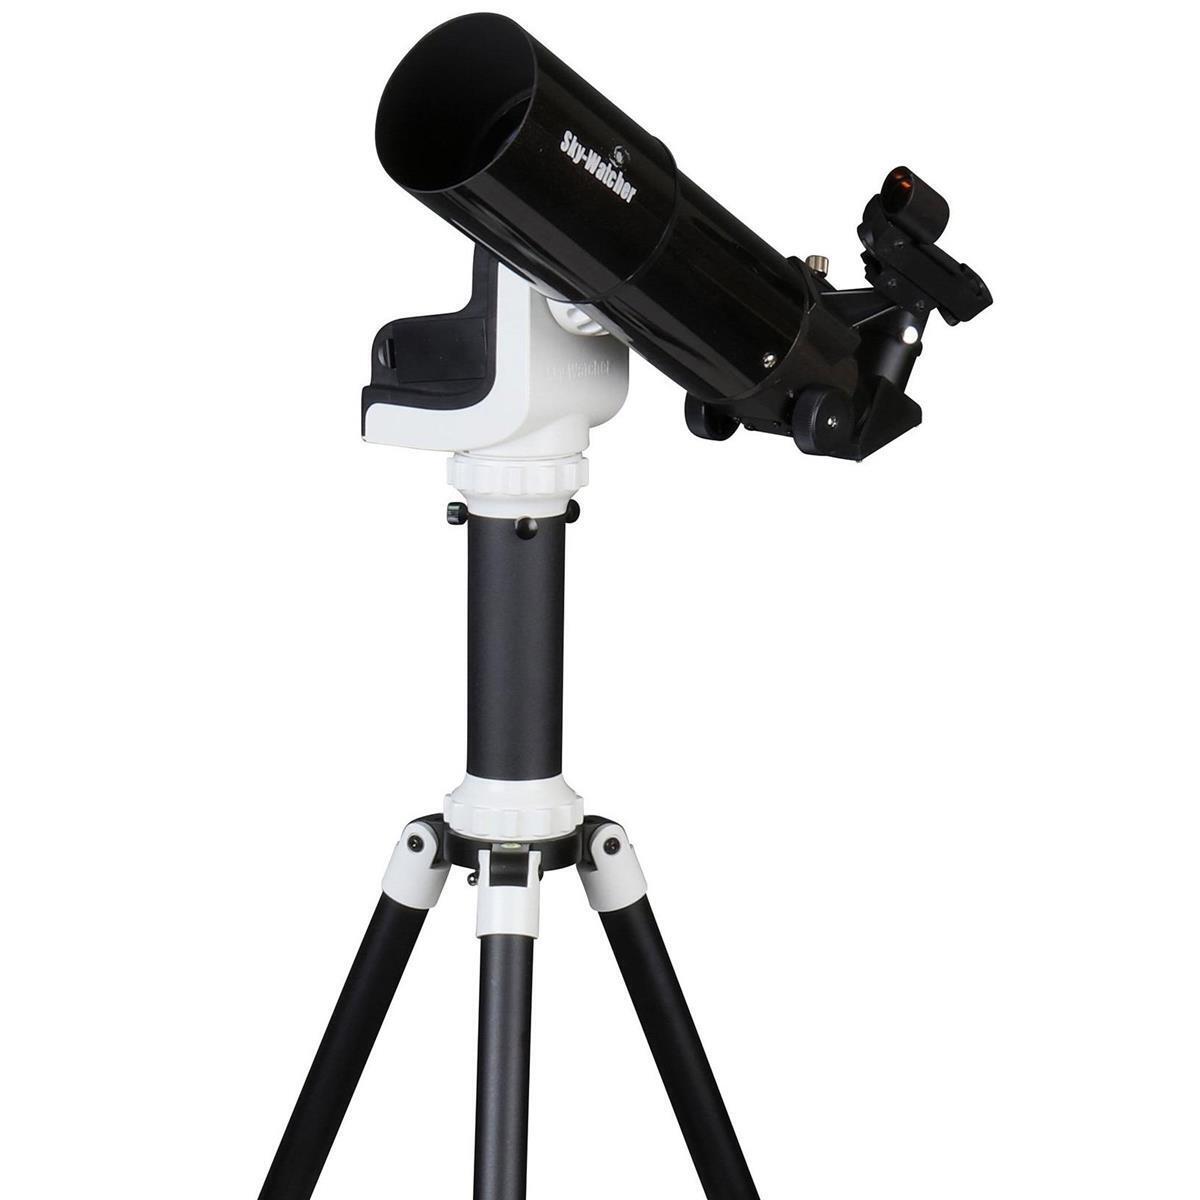 Sky-Watcher Maksutov Cassegrain 80mm Telescope with AZ-GTe Go-TO Wifi Mount